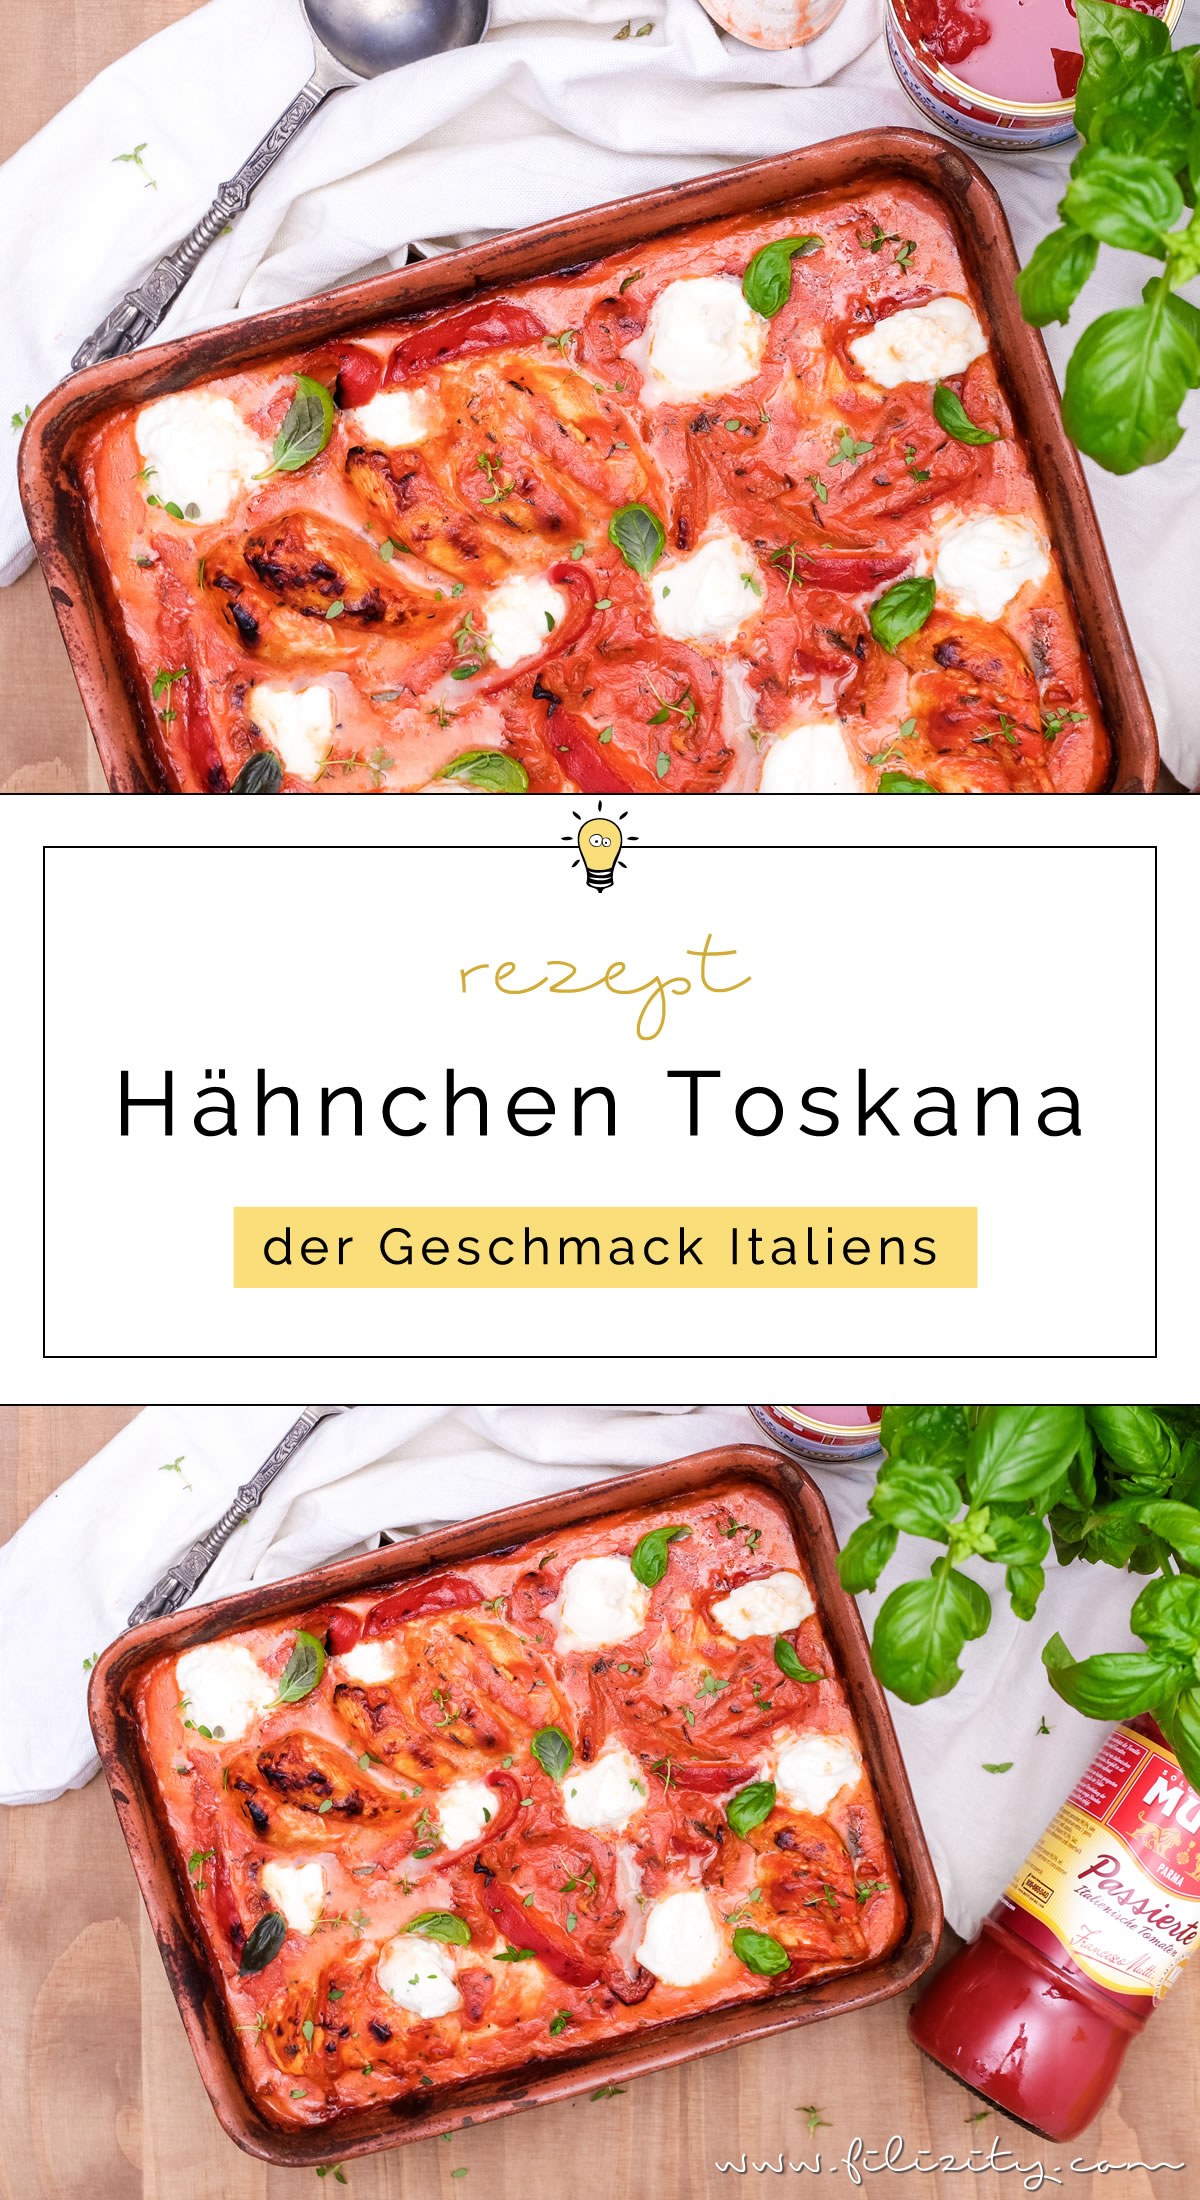 Hähnchen Toskana mit Burrata & frischen Kräutern | Angelehnt an Hackbällchen Toskana | Filizity.com | Food-Blog aus dem Rheinland #mutti #tomaten #toskana #toscana